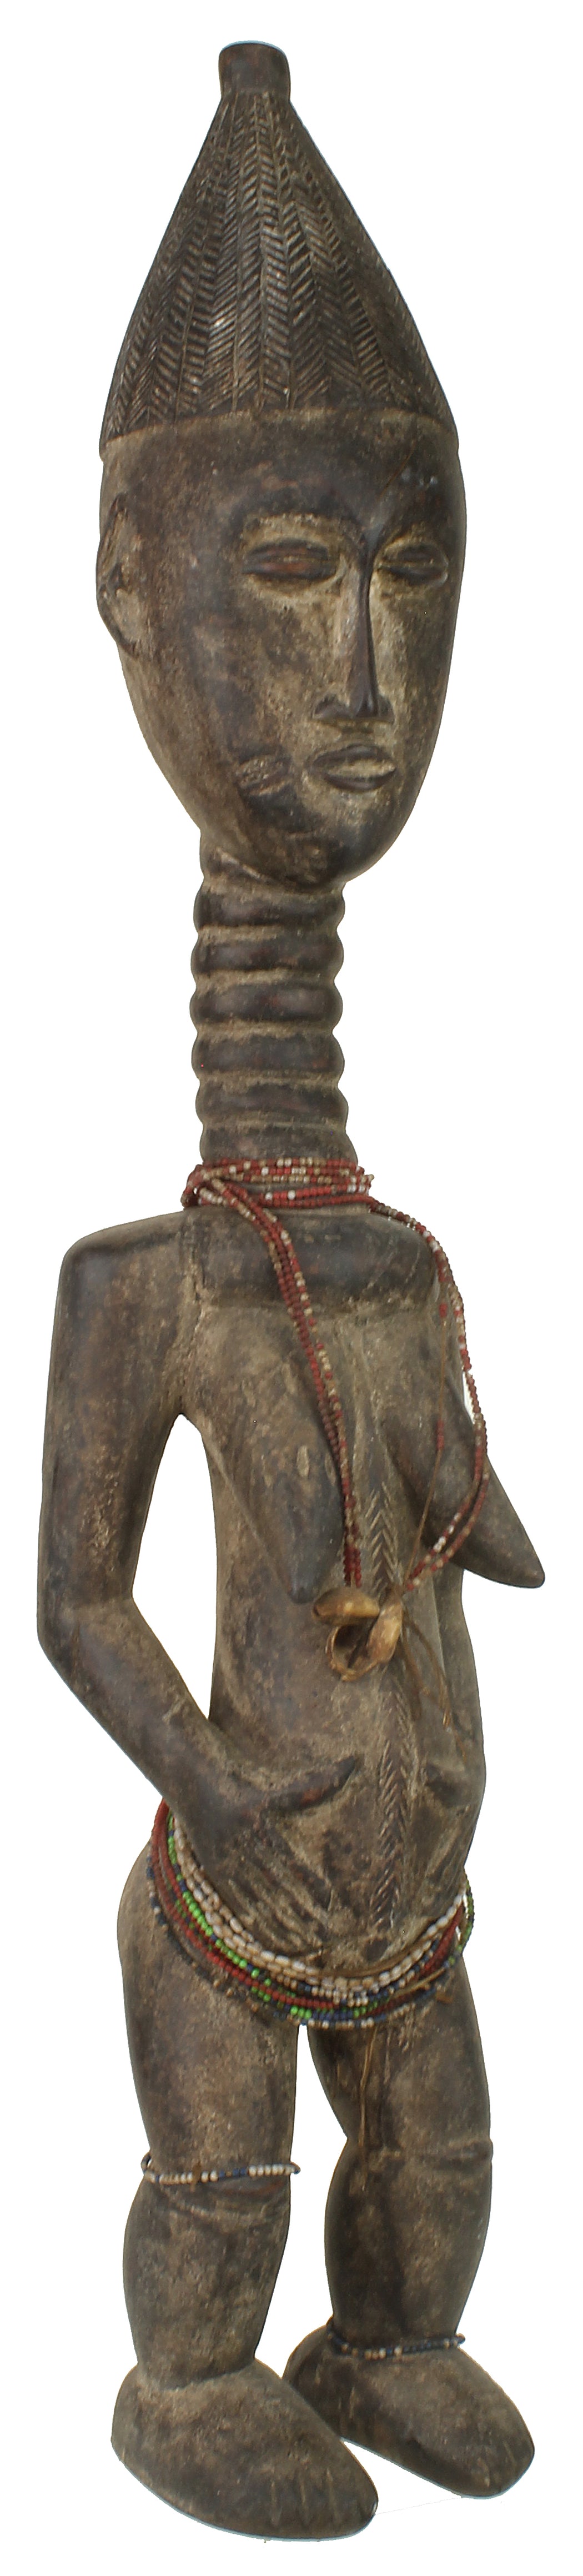 Very Tall Long Neck Baule Female Ancestor Spirit Statue | 34.5" - Niger Bend